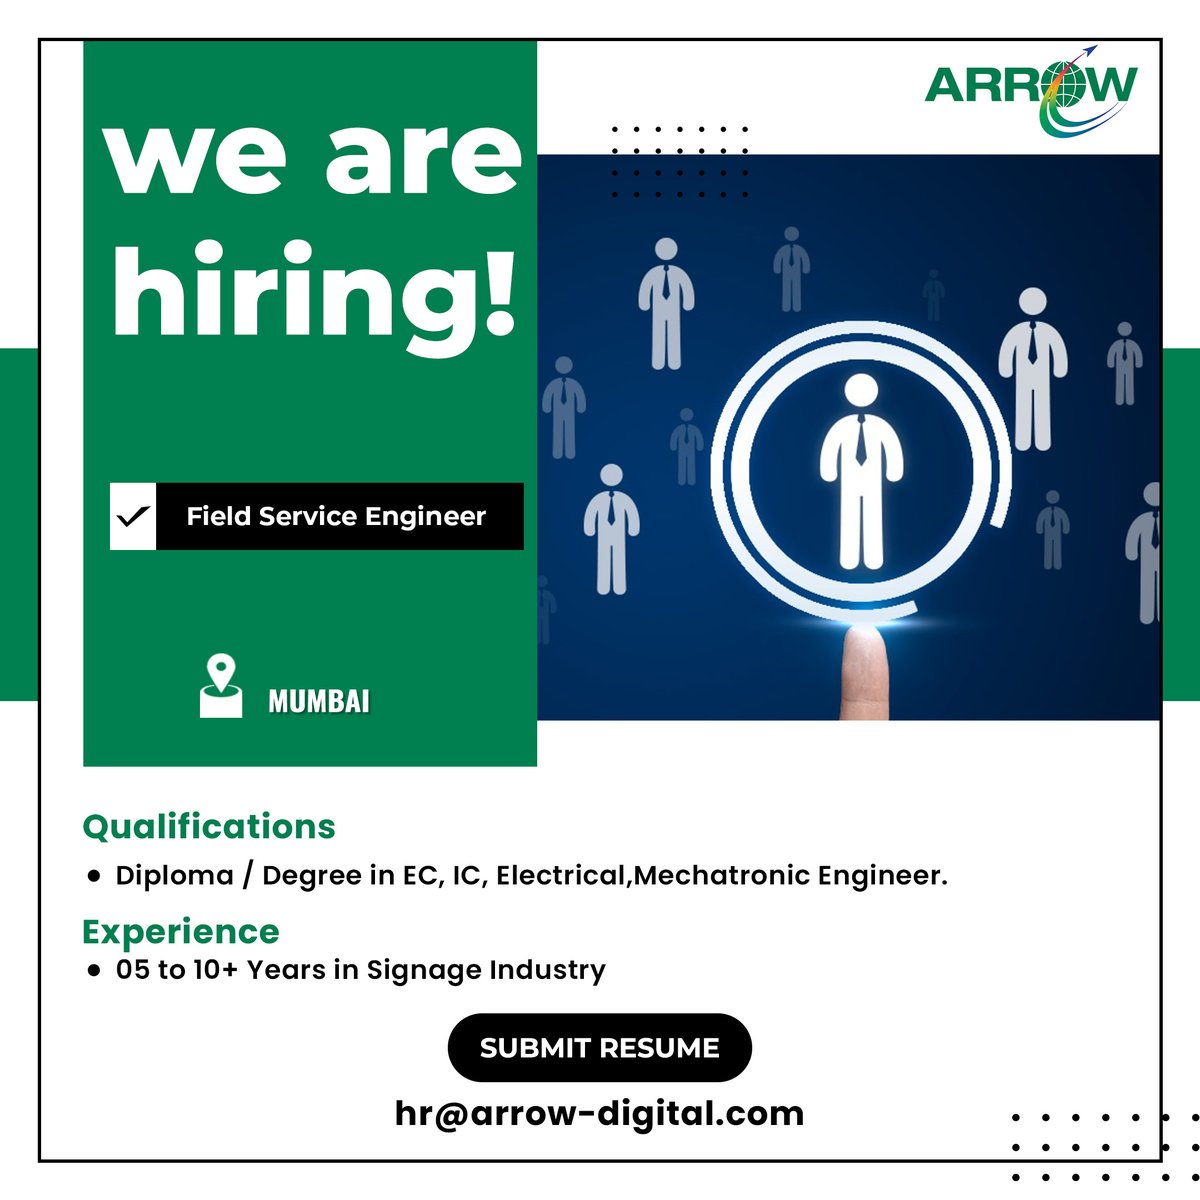 Hiring Alert!

We are hiring 𝐅𝐢𝐞𝐥𝐝 𝐒𝐞𝐫𝐯𝐢𝐜𝐞 𝐄𝐧𝐠𝐢𝐧𝐞𝐞𝐫 for Mumbai!

Interested candidates can email their resumes to hr@arrow-digital.com.

#ArrowDigital #HiringAlert #FieldServiceEngineer #MumbaiJobs #JobOpportunity #CareerOpportunity #NowHiring #JobAlert